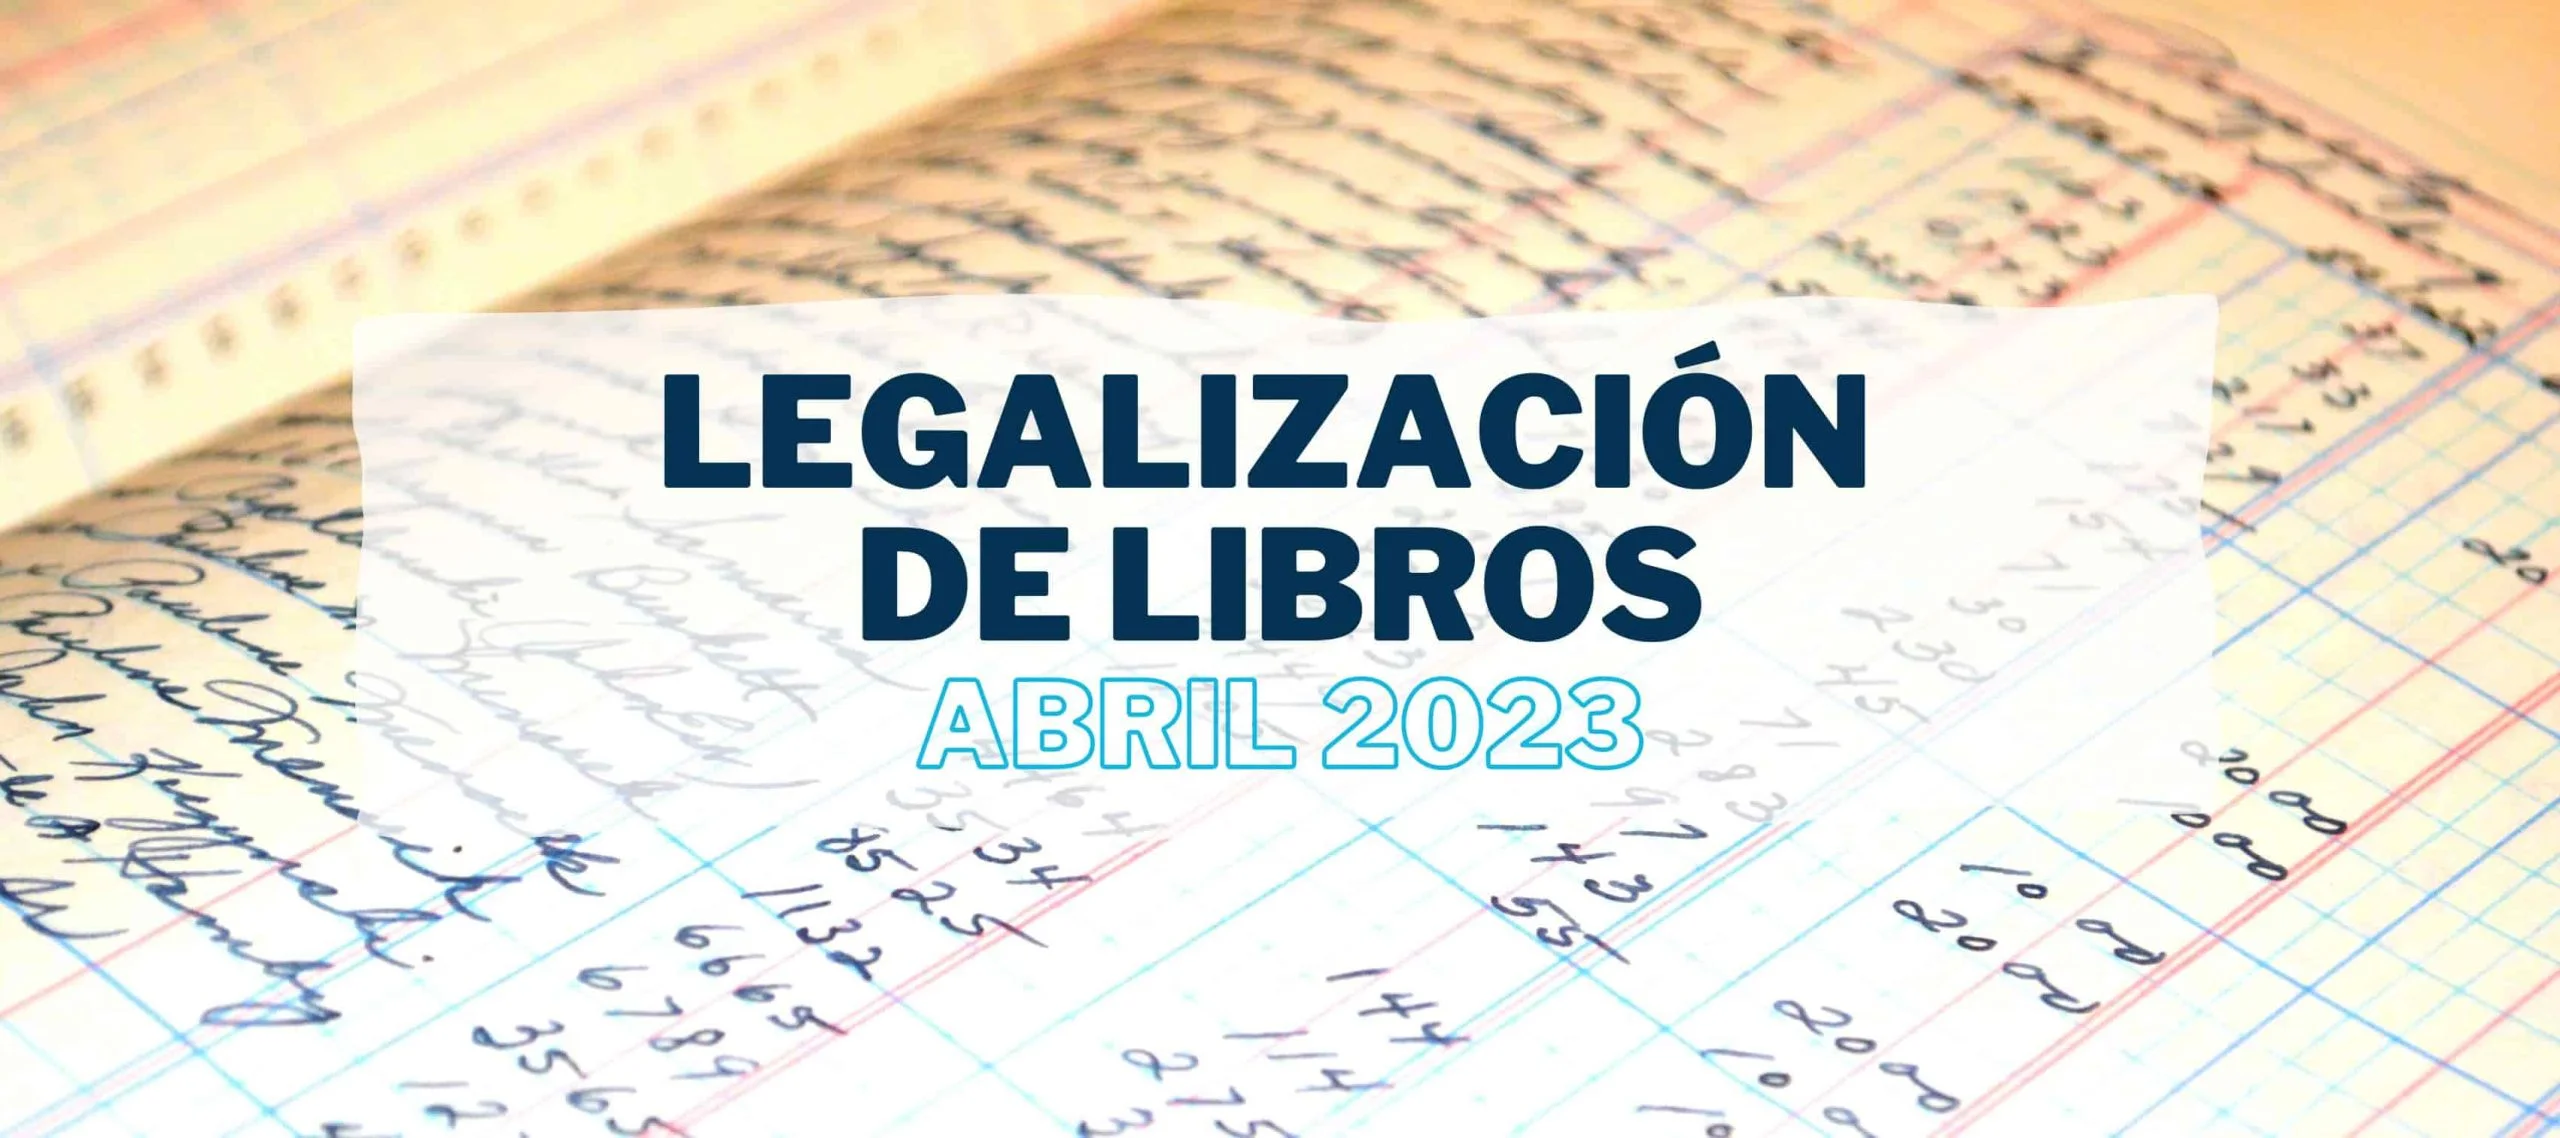 Legalización de libros con fecha límite en abril Iniciativa Fiscal